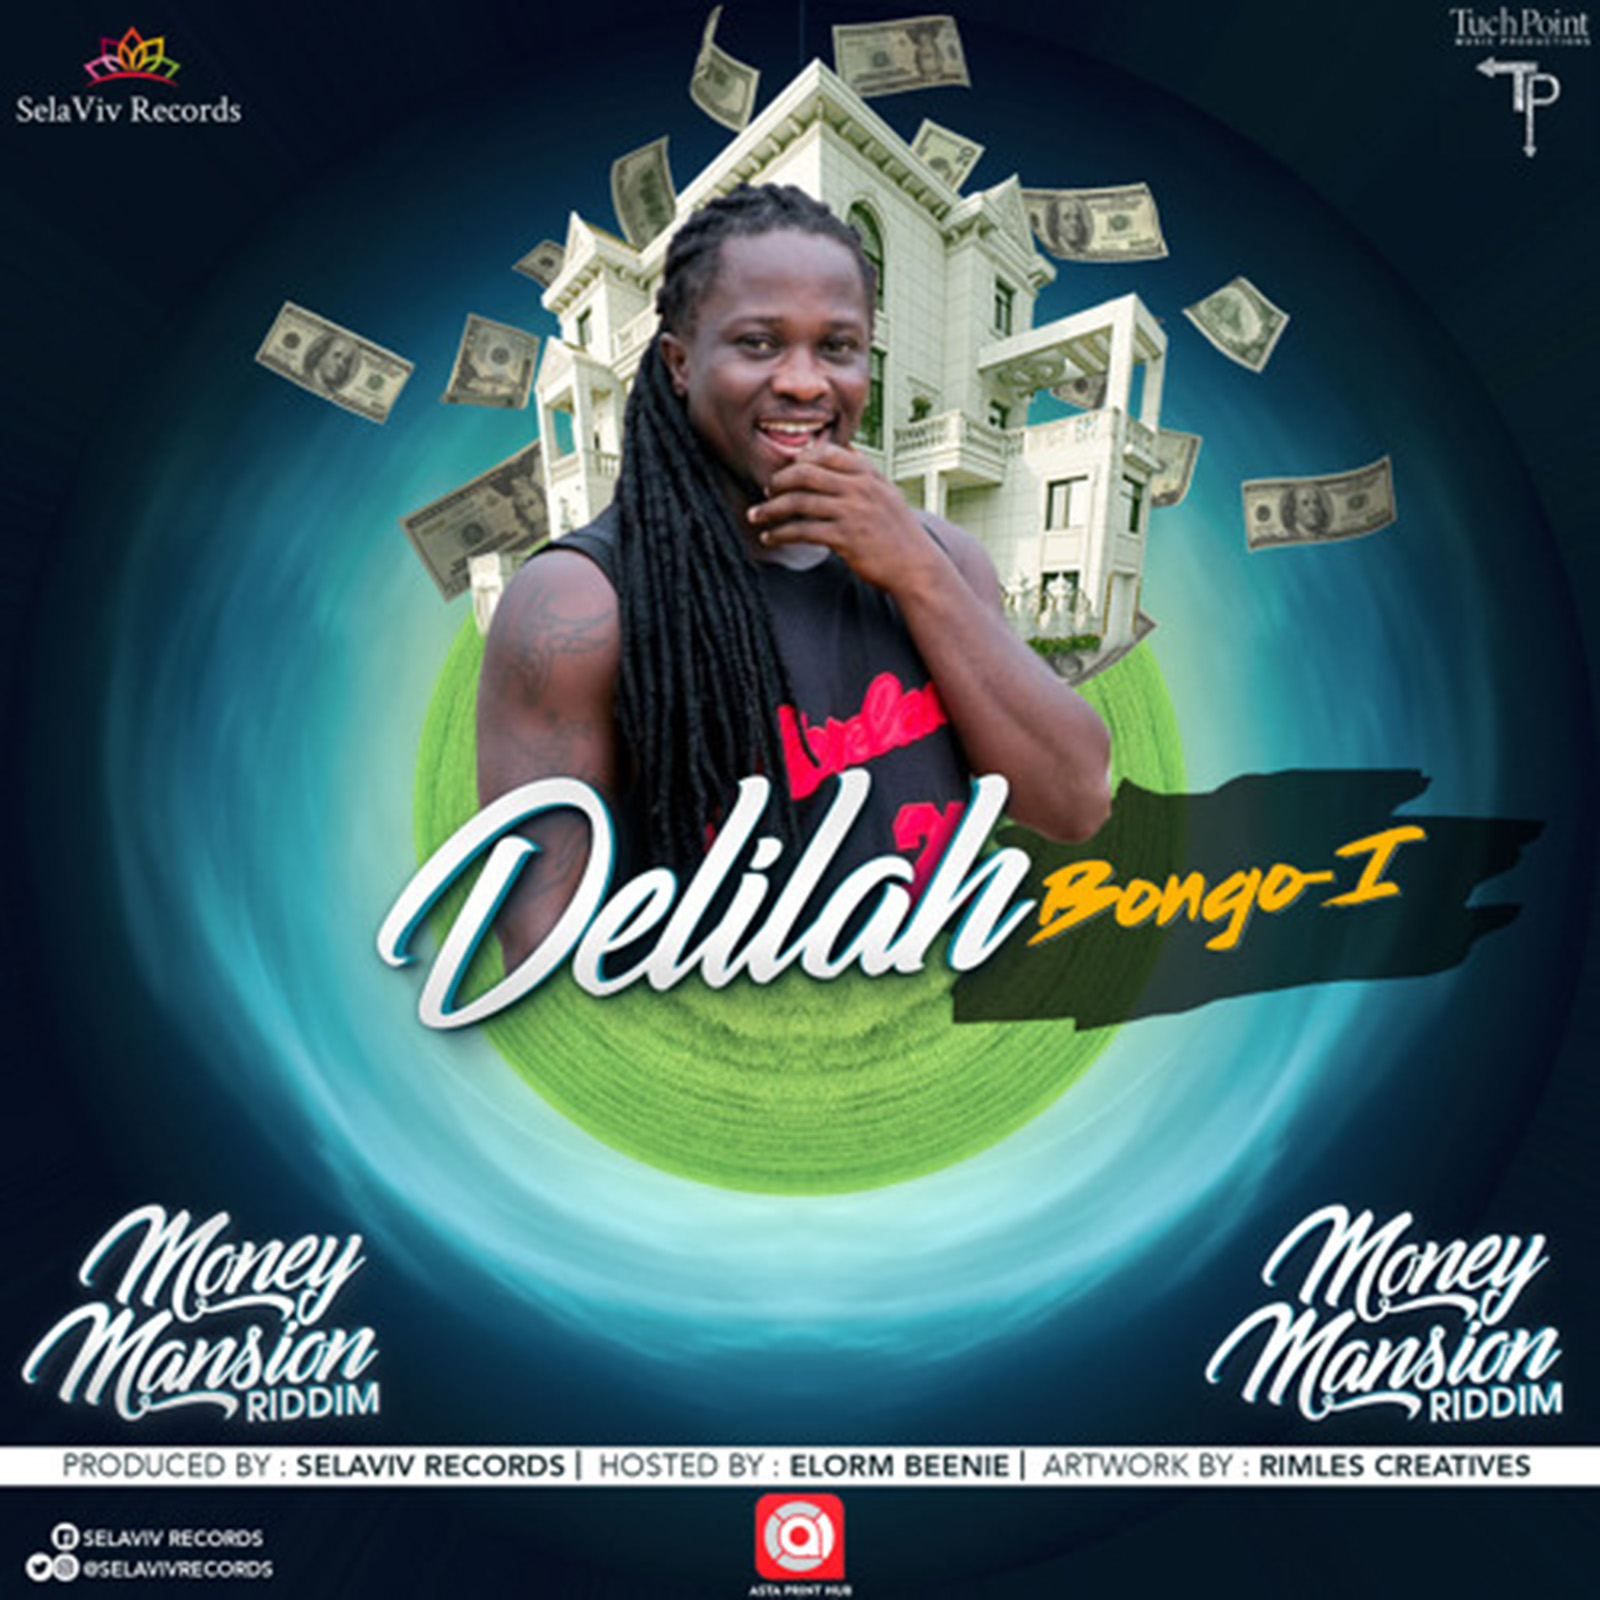 Delilah (Money Mansion Riddim) by Bongo-I